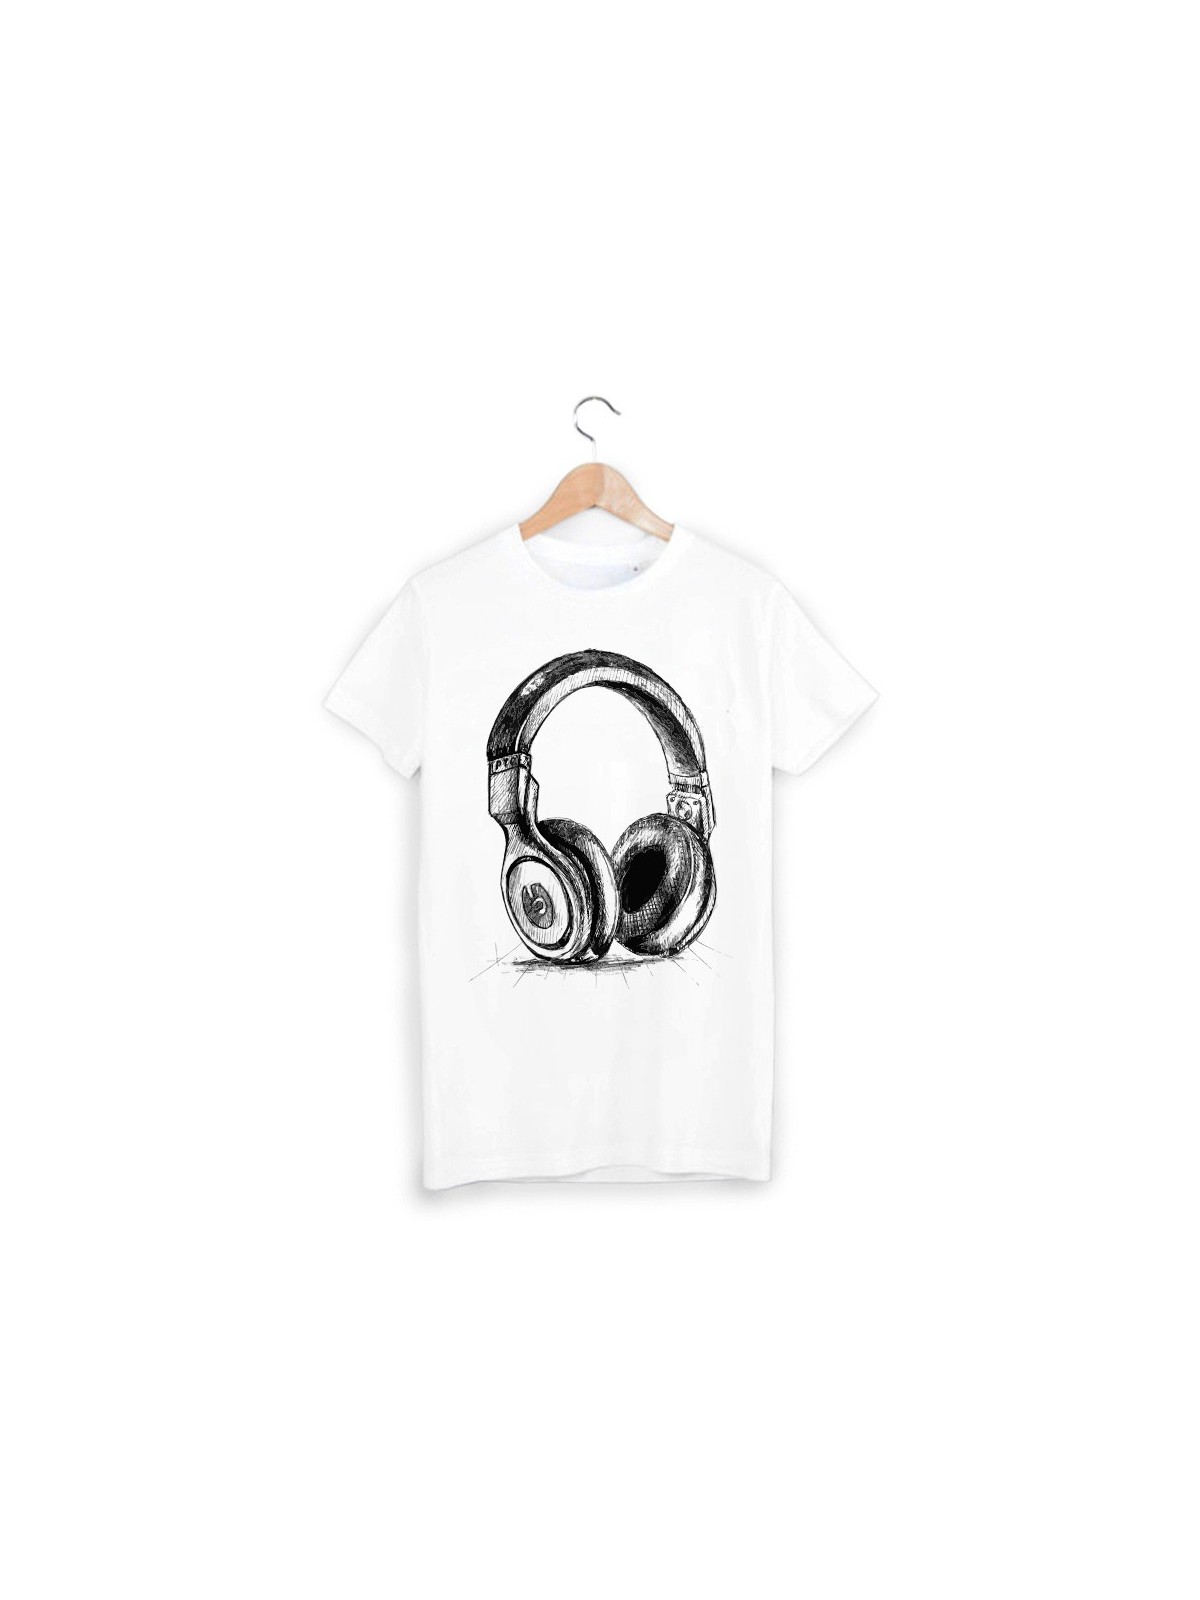 T-Shirt casque musique ref 1009